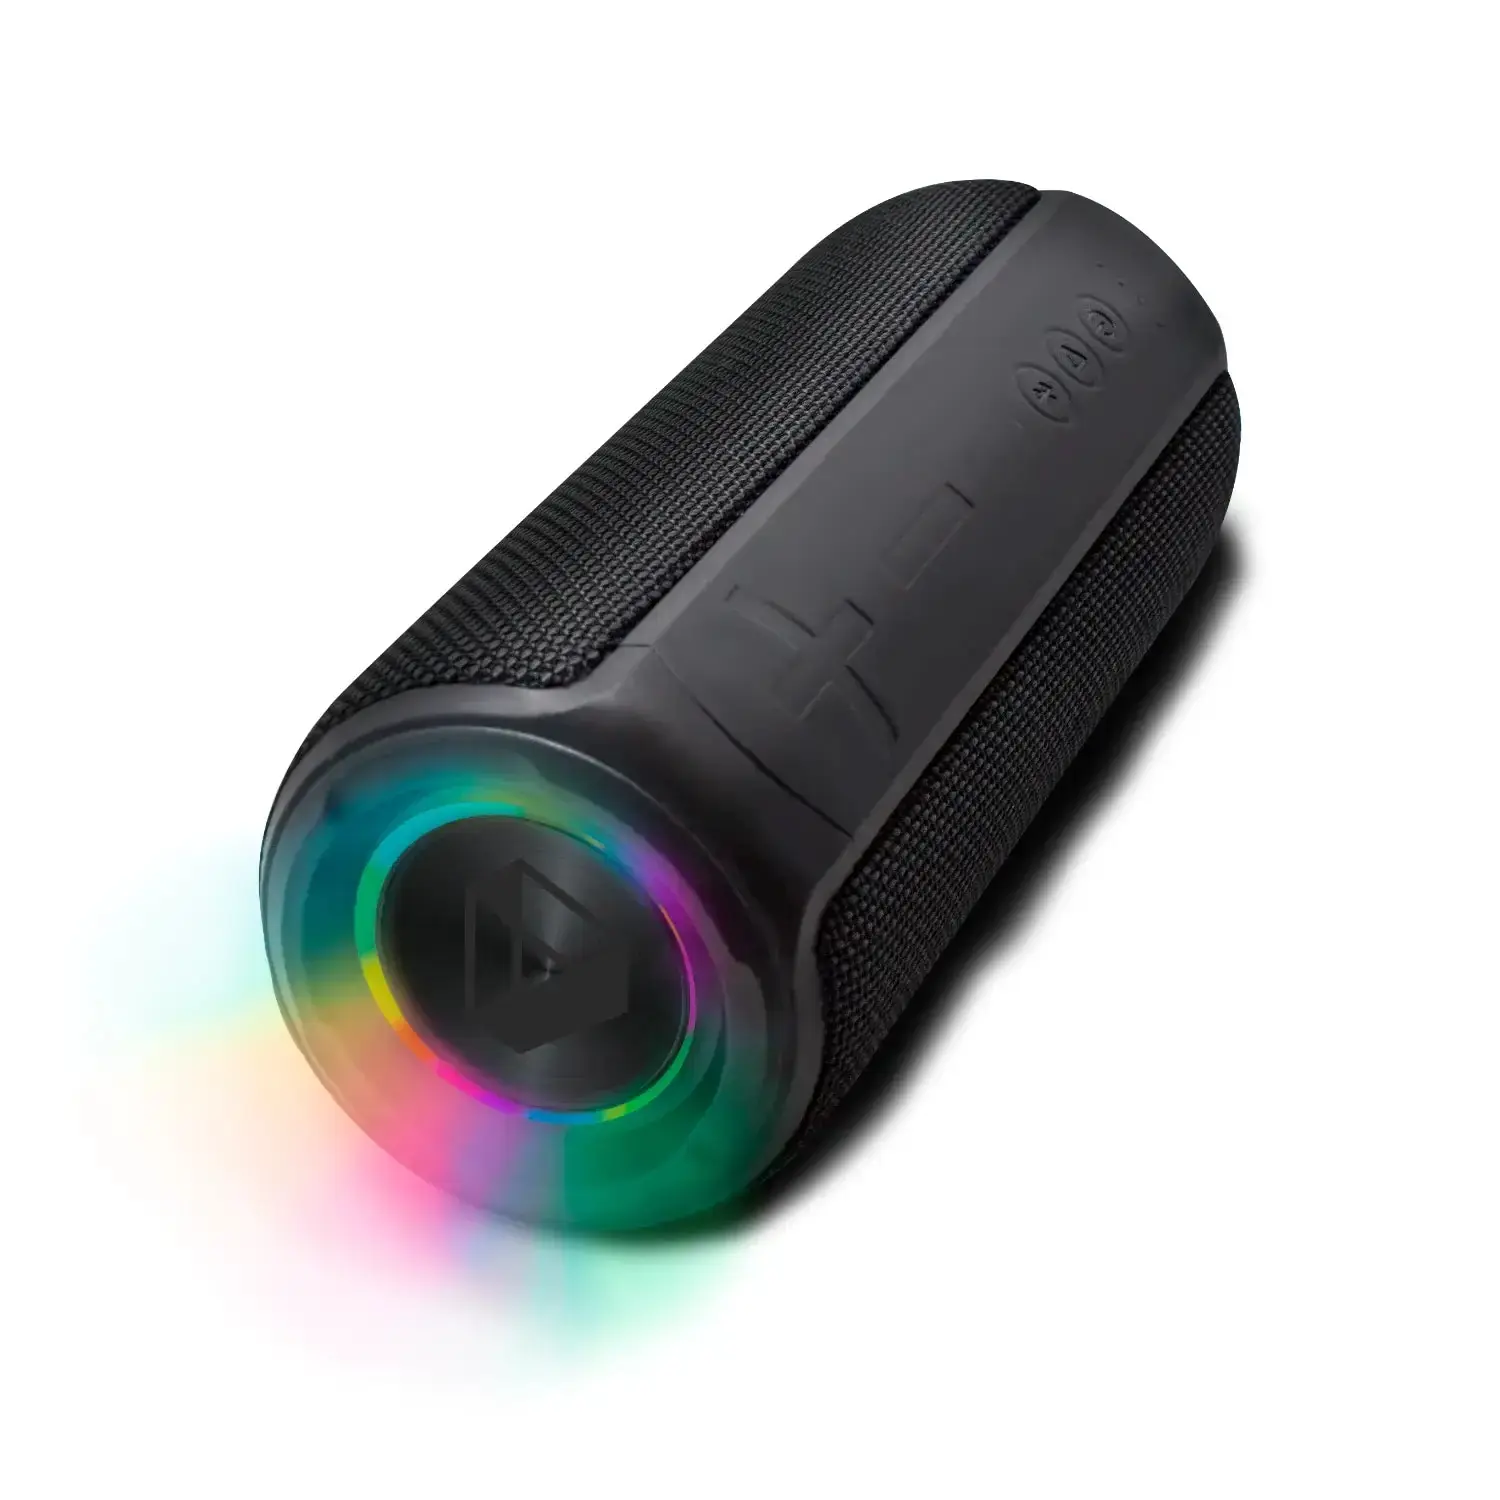 GLOWBEATS Wireless Bluetooth Speaker, Black, Bottom Angle, with RGB lights illuminating the bottom.